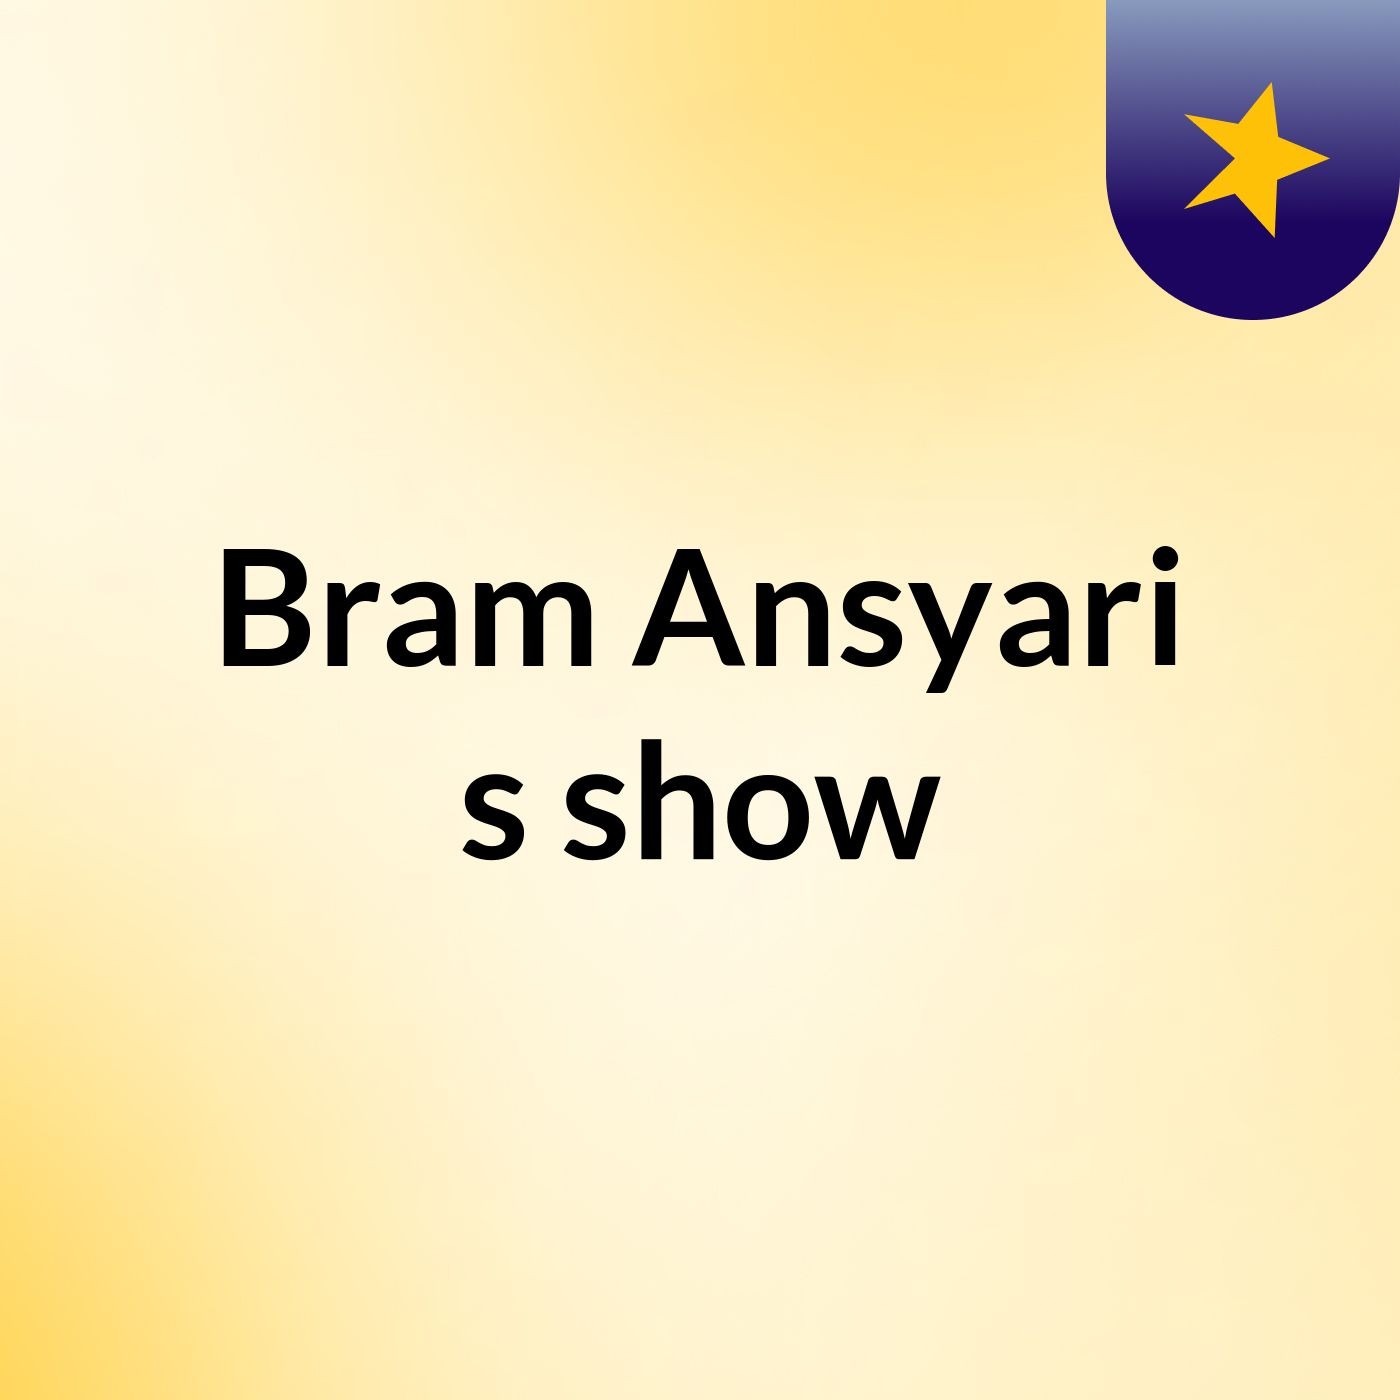 Bram Ansyari's show